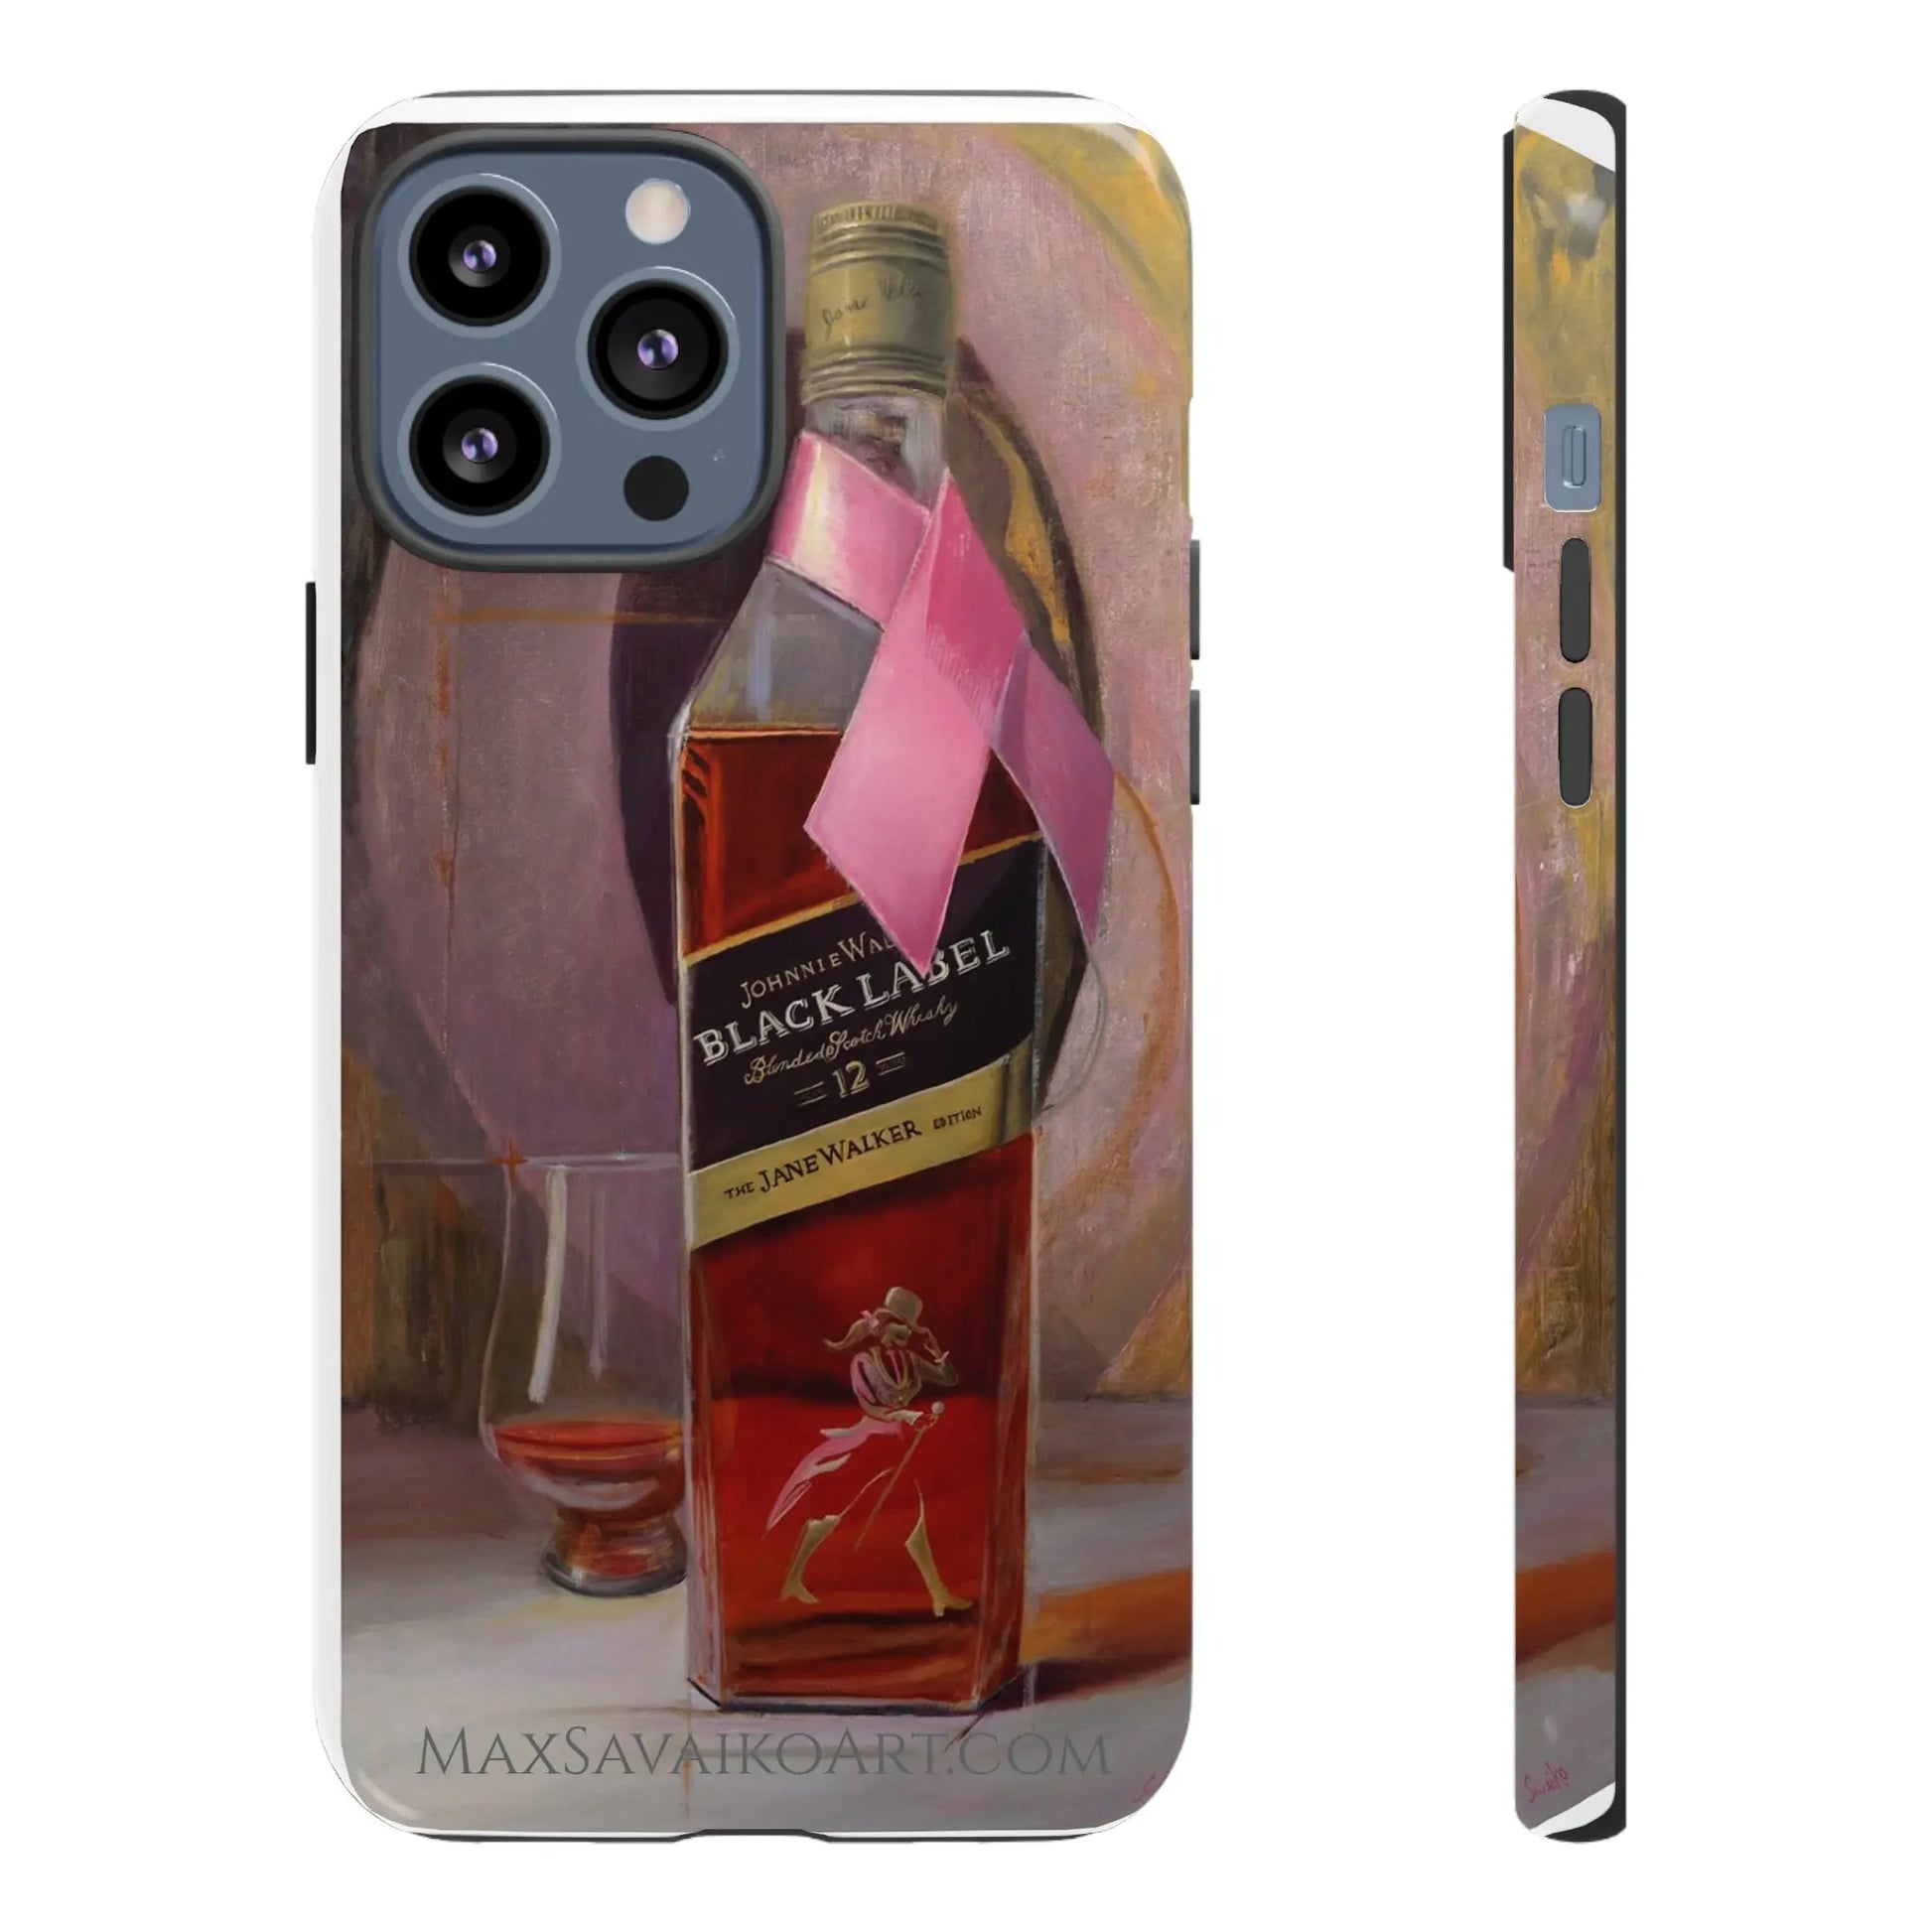 Savaiko Art - Walk with Jane Tough phone case - Max Savaiko Art